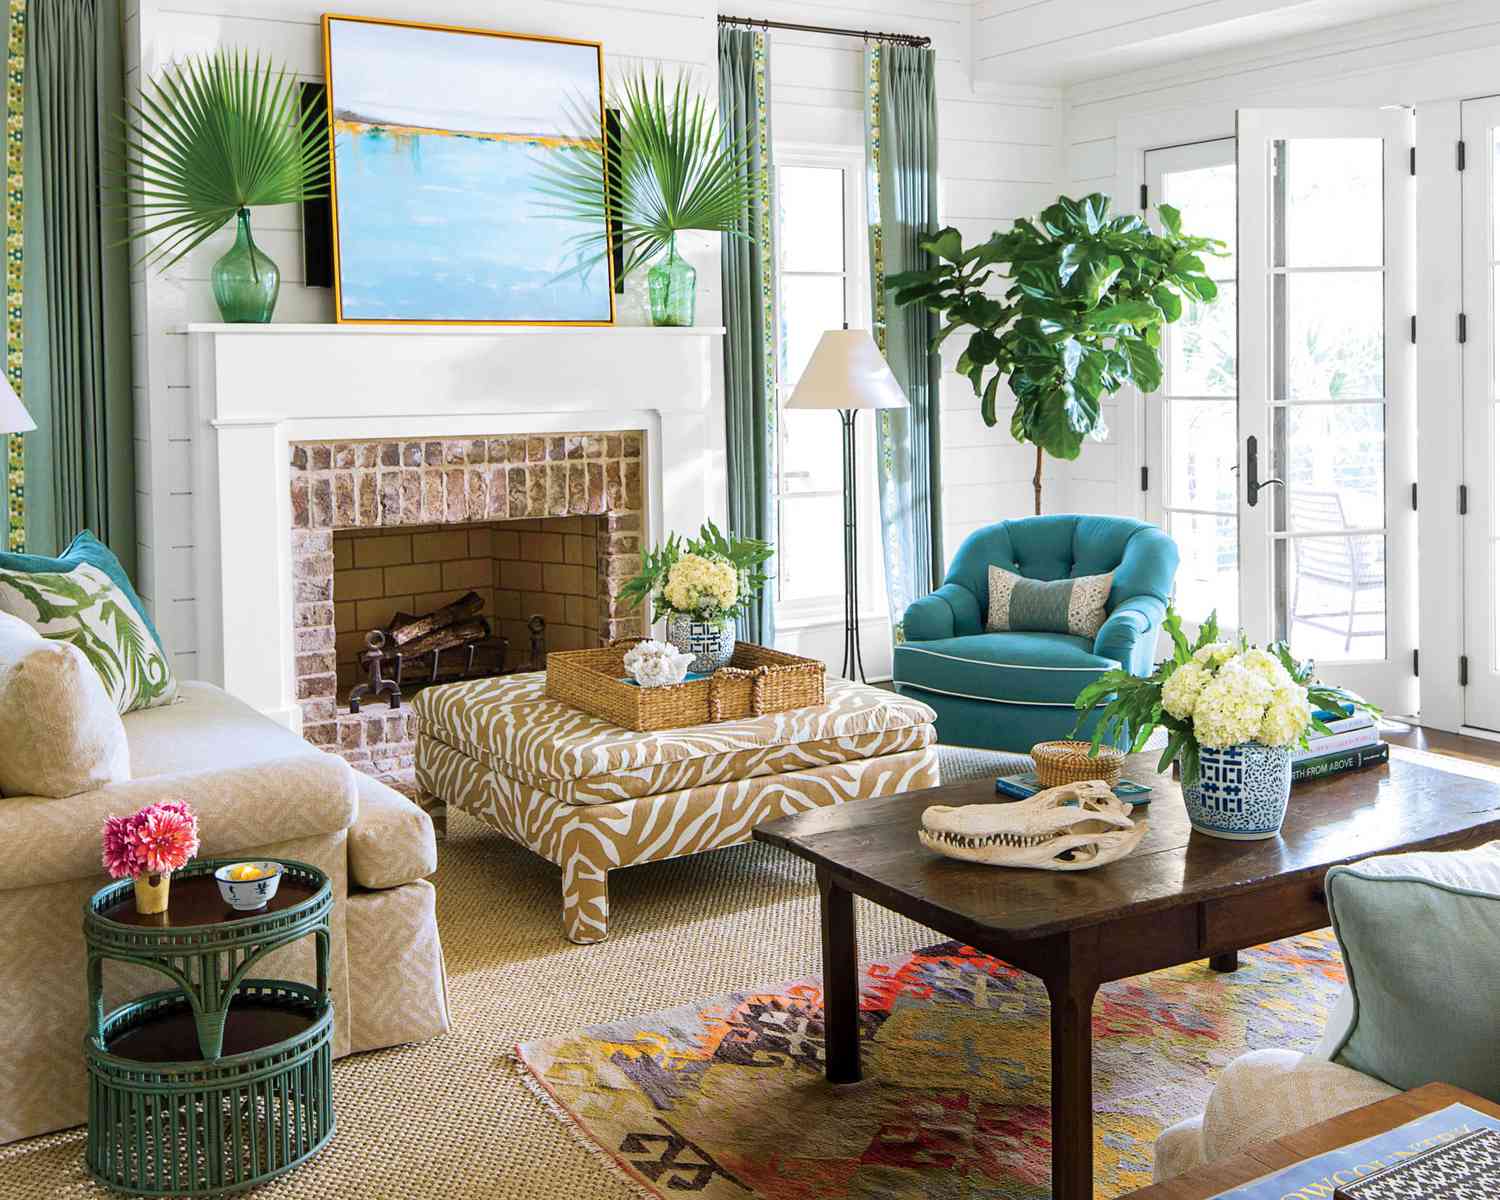 Coastal living room ideas – simple design tips for beach house interiors